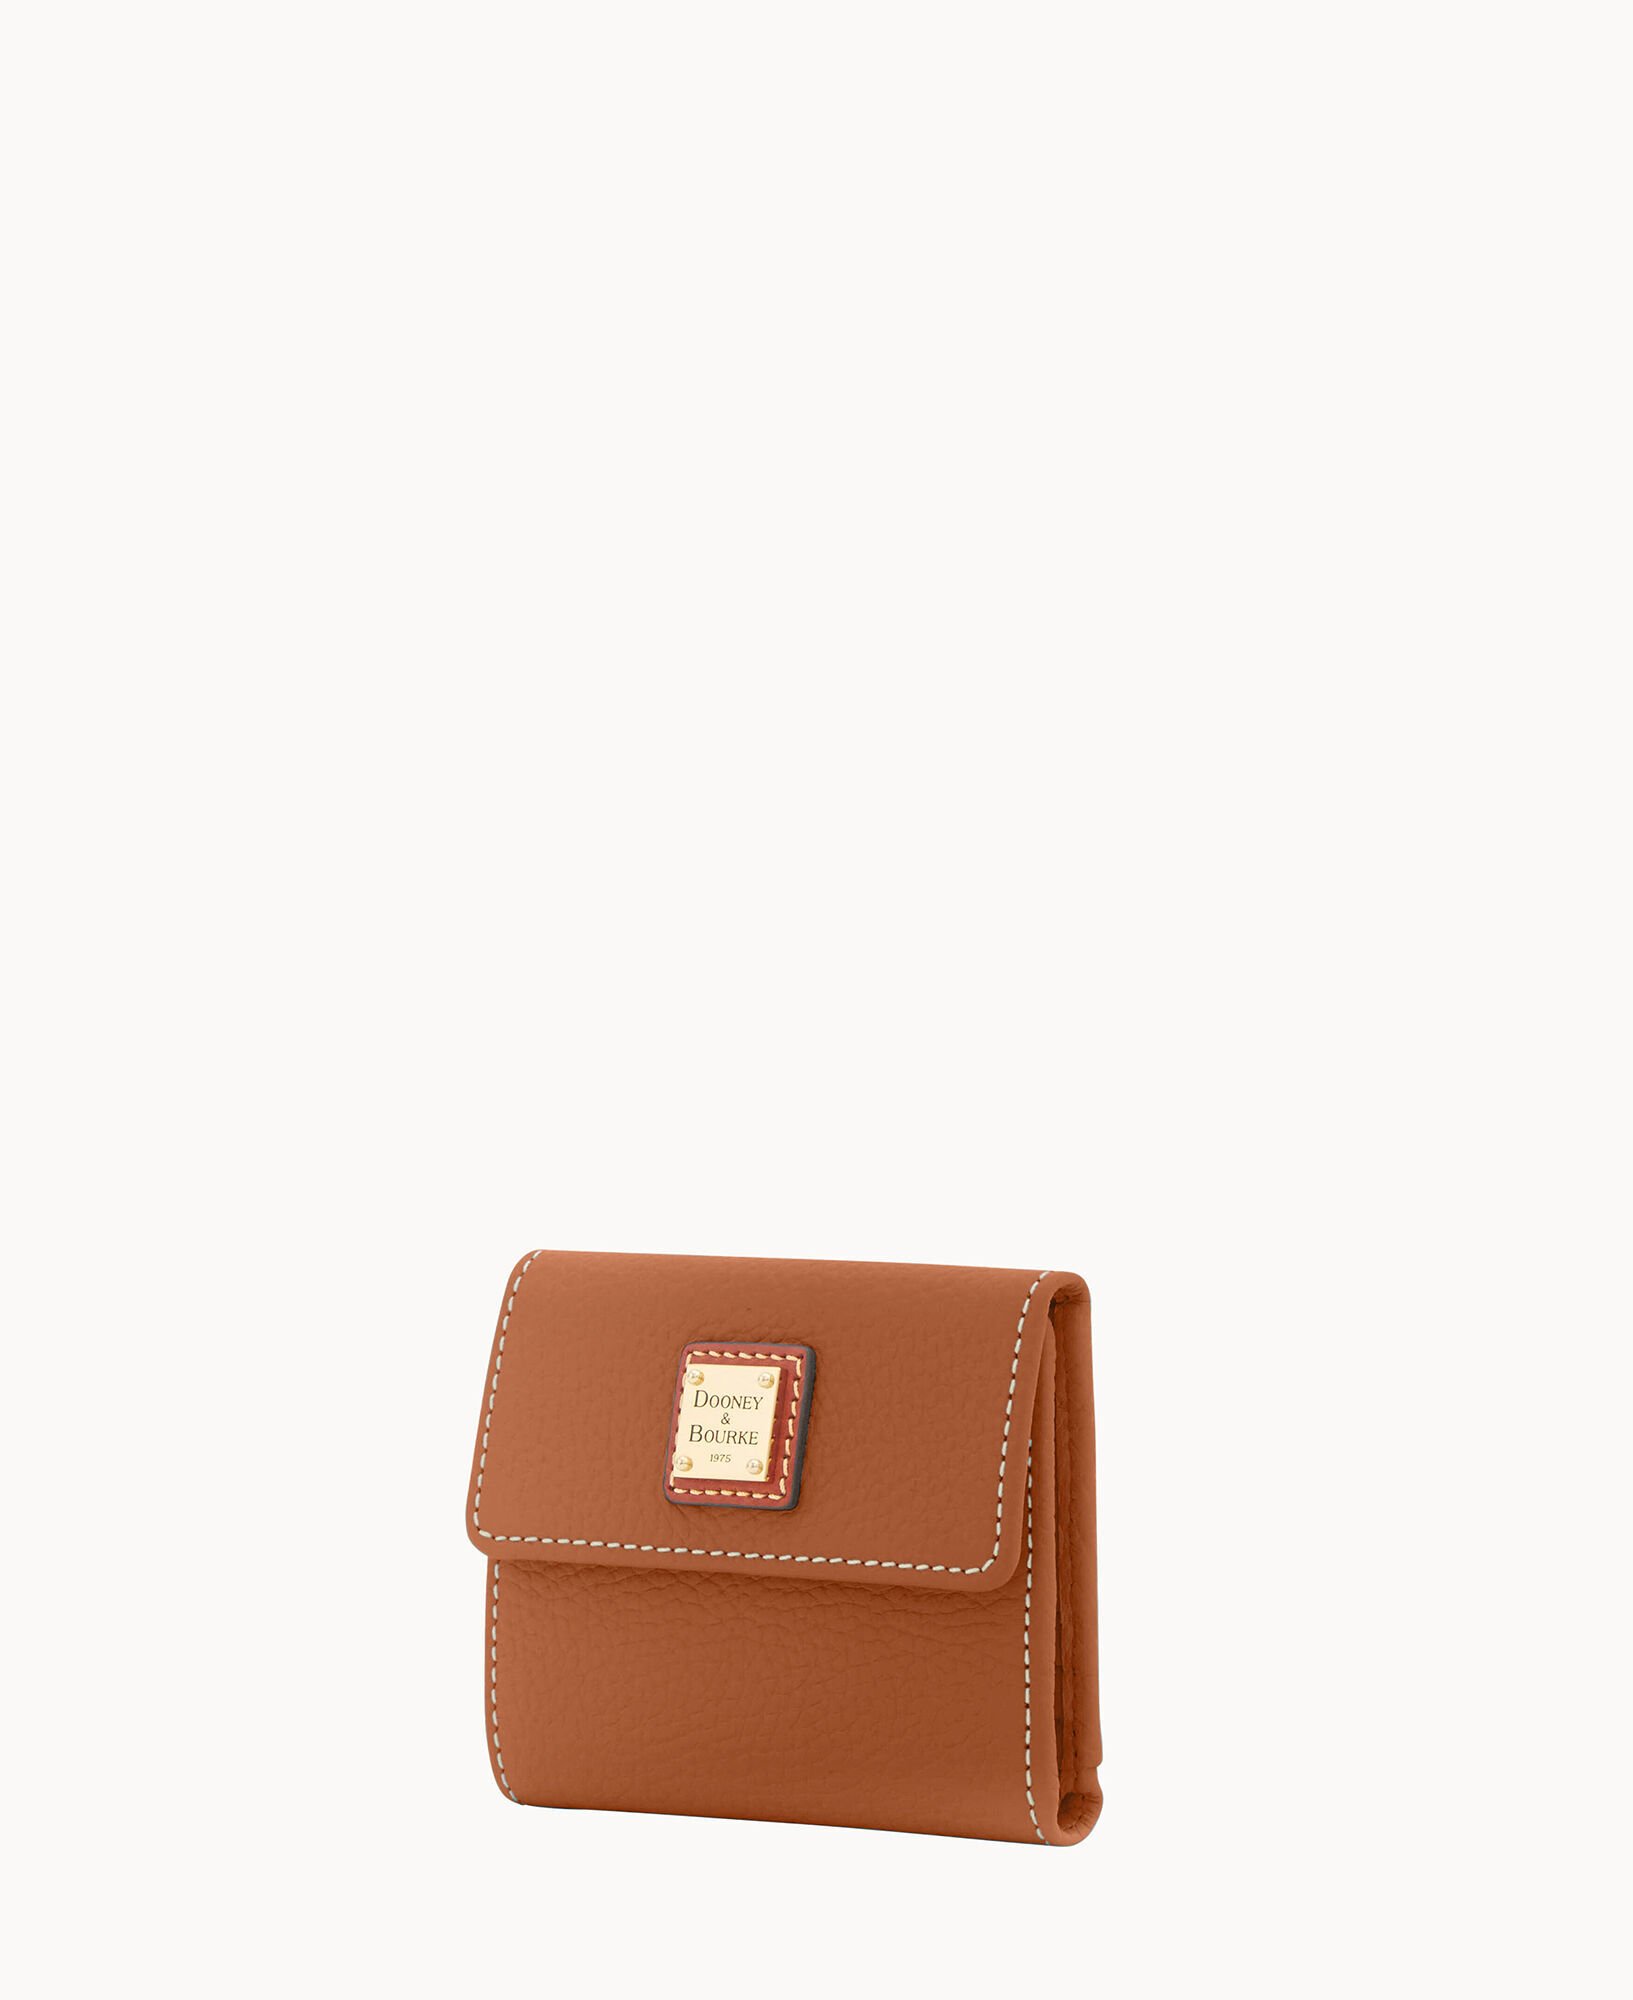 Dooney & Bourke Pebble Leather Small Flap Wallet - Caramel/Gold